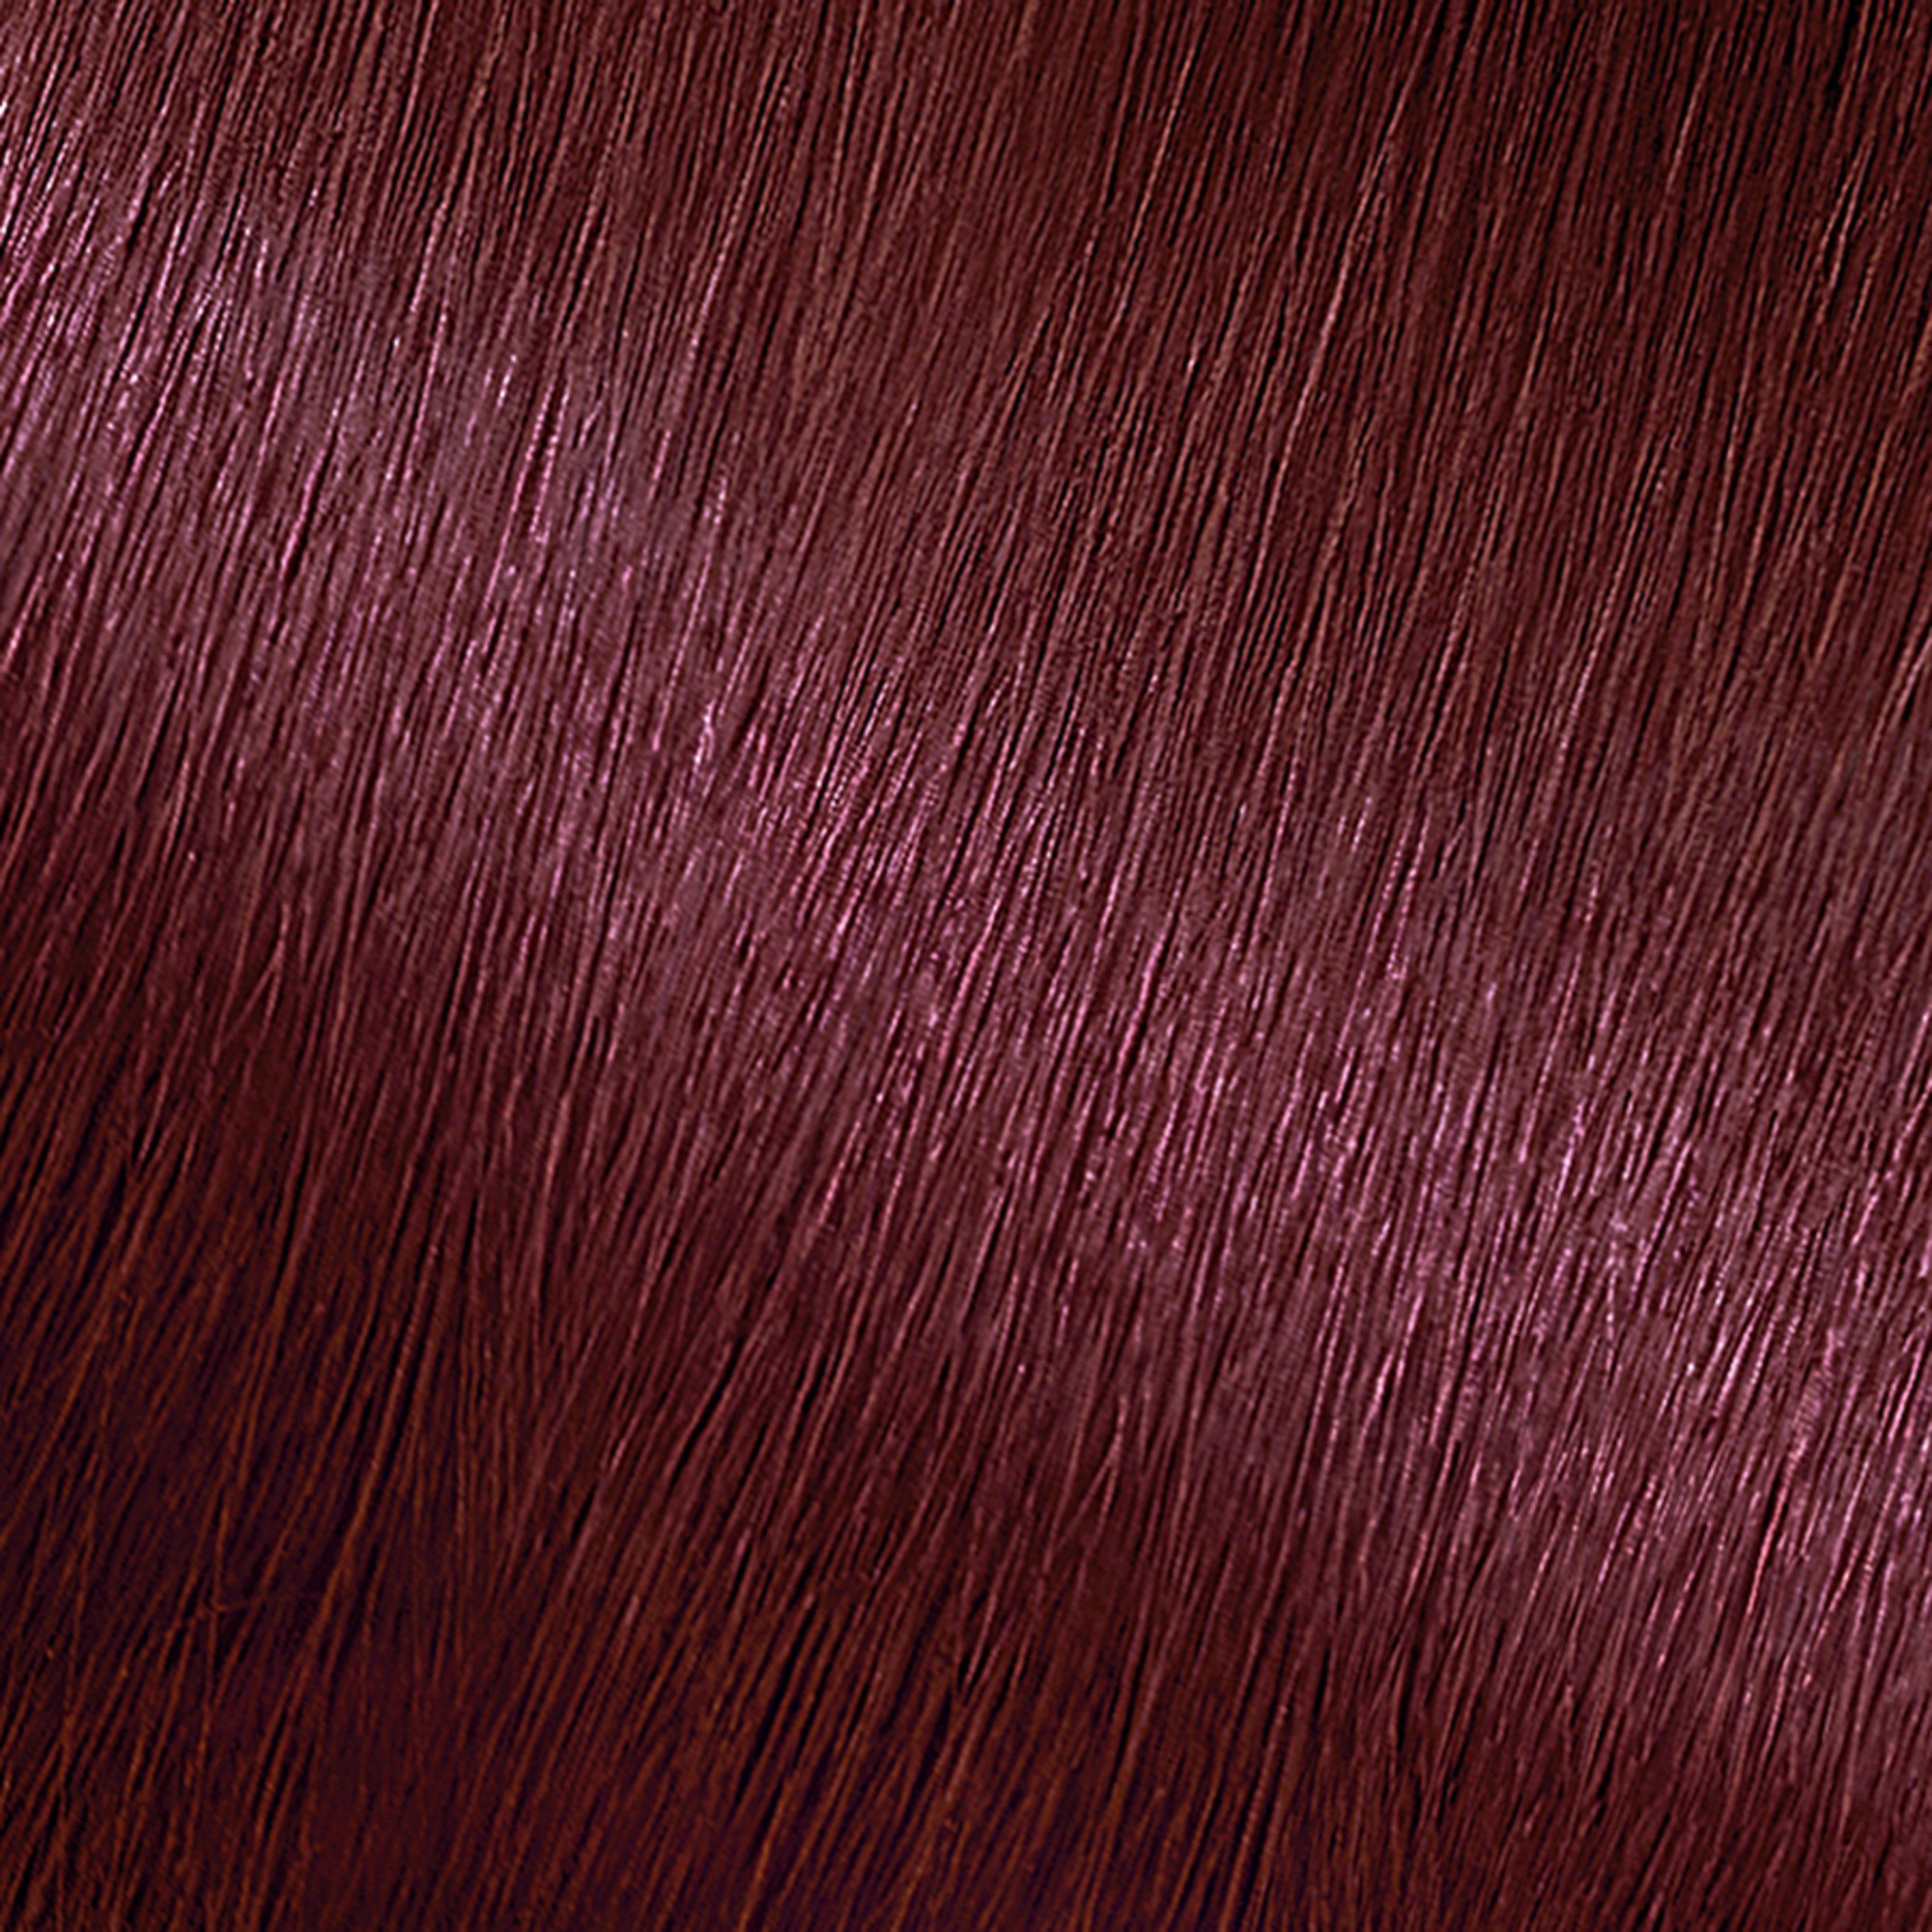 Garnier Nutrisse Nourishing Hair Color Creme 42 Deep Burgundy (Black  Cherry) - Shop Hair Color at H-E-B